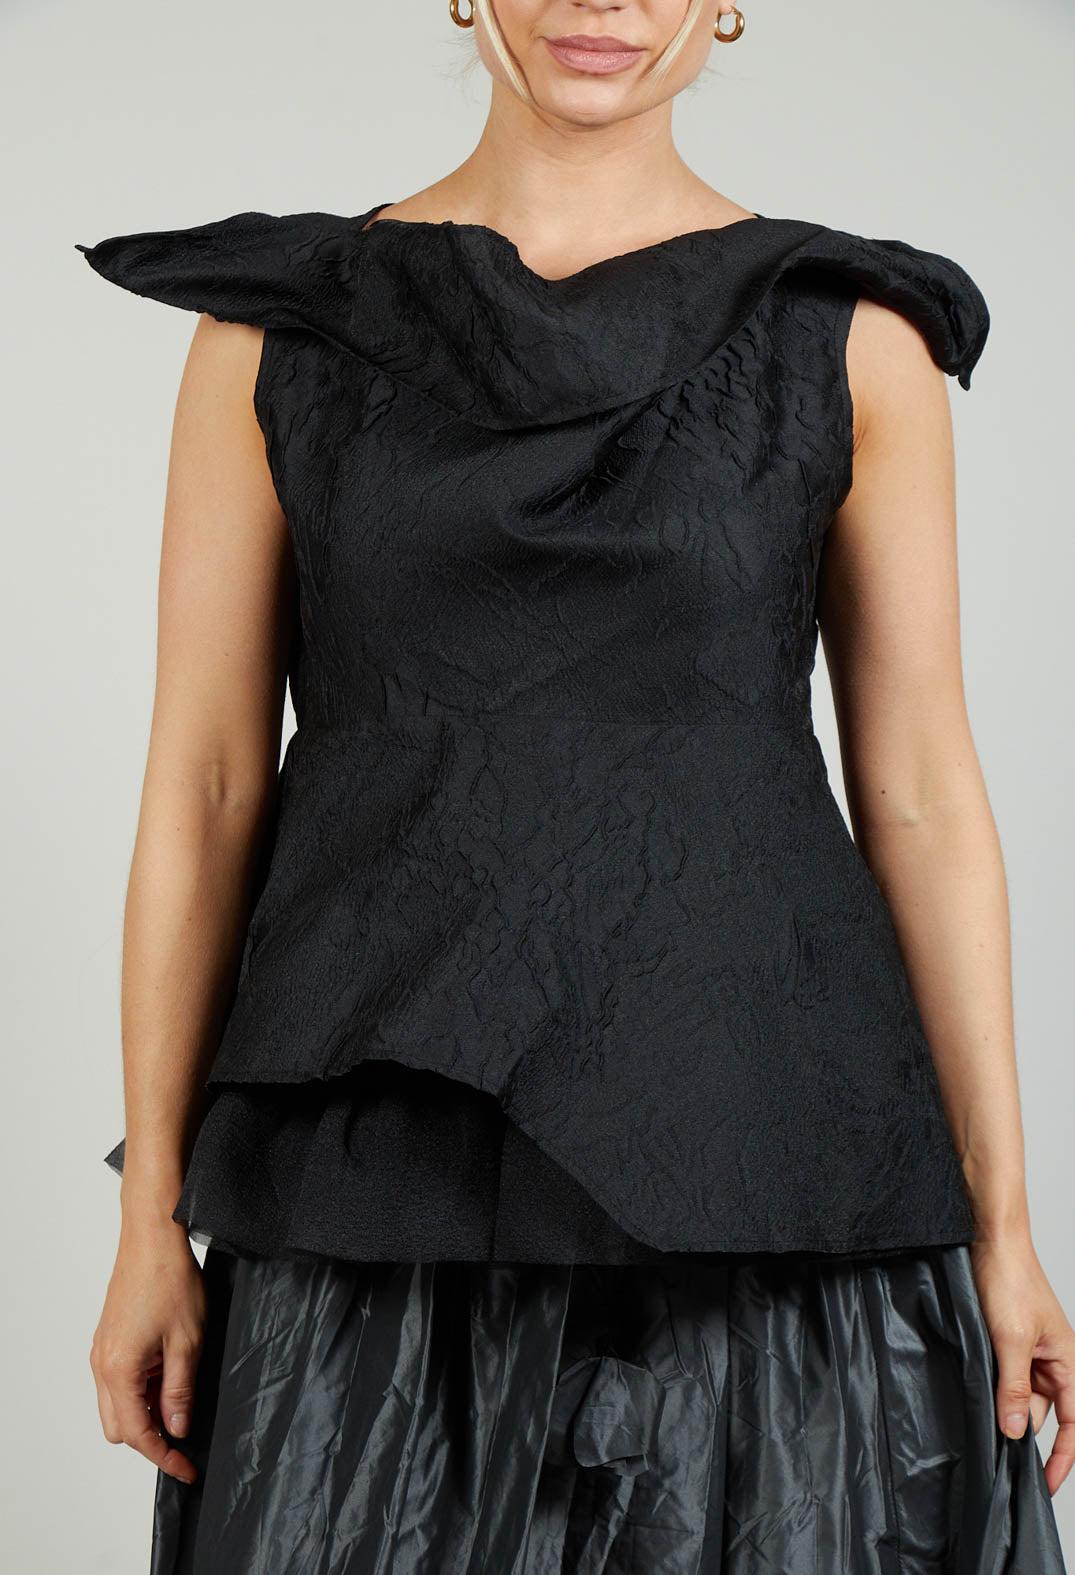 Lace Cowl Neckline Top in Black